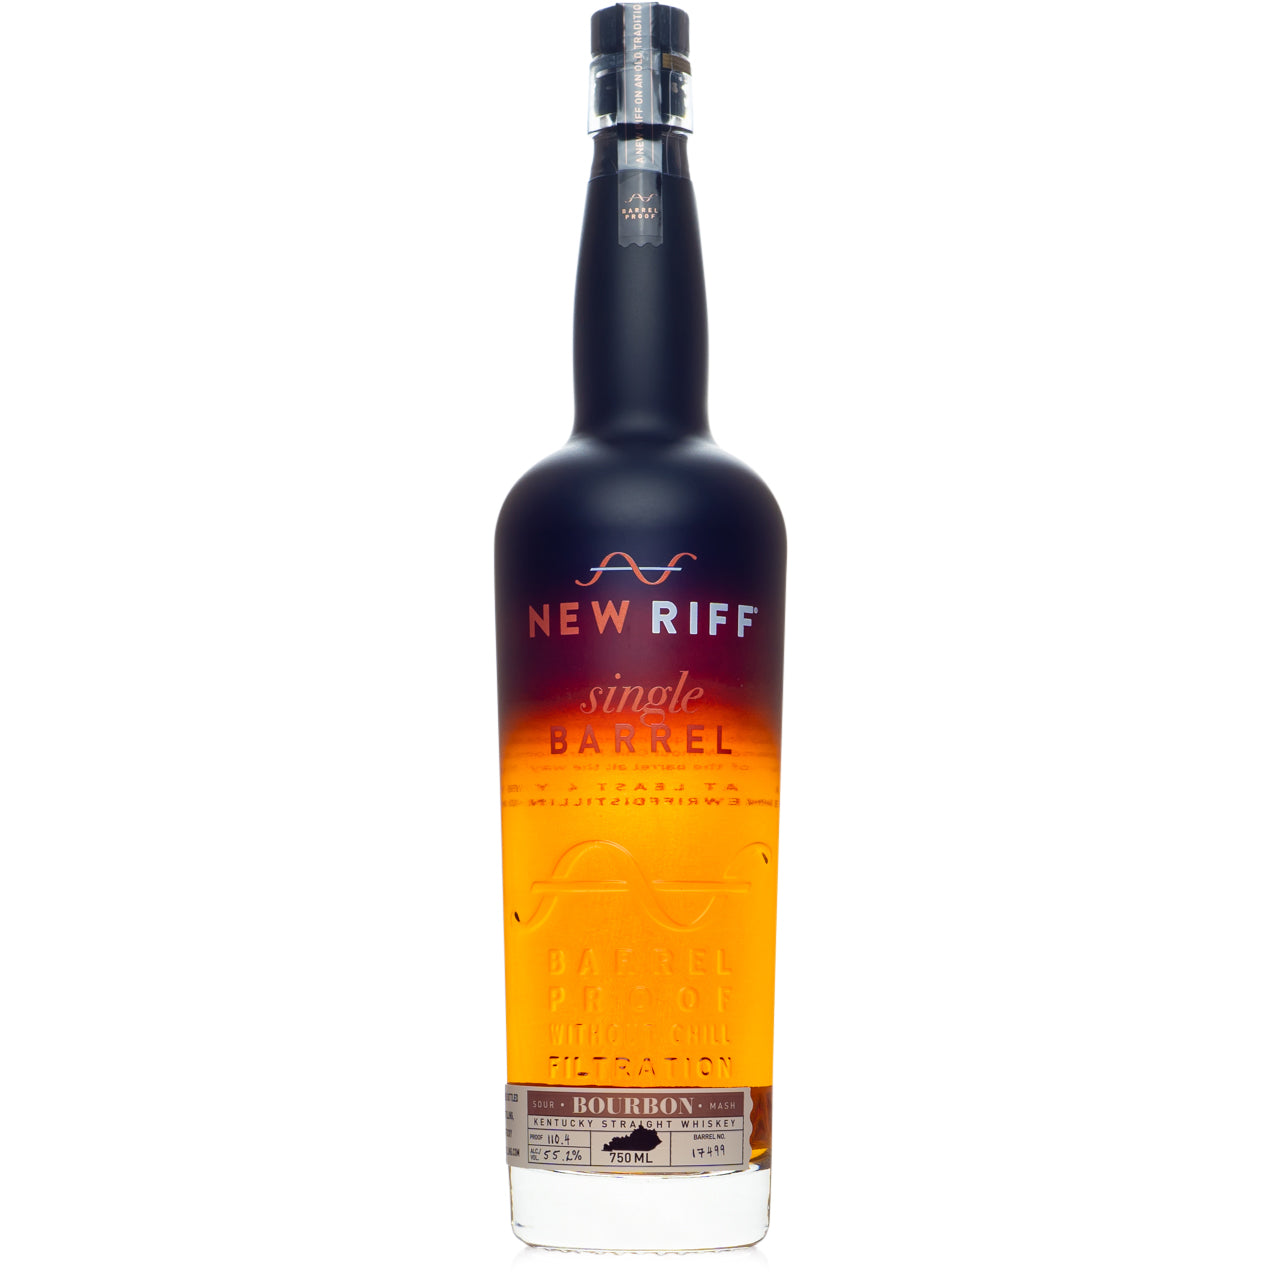 New Riff Barrel Strength Single Barrel Bourbon Whiskey